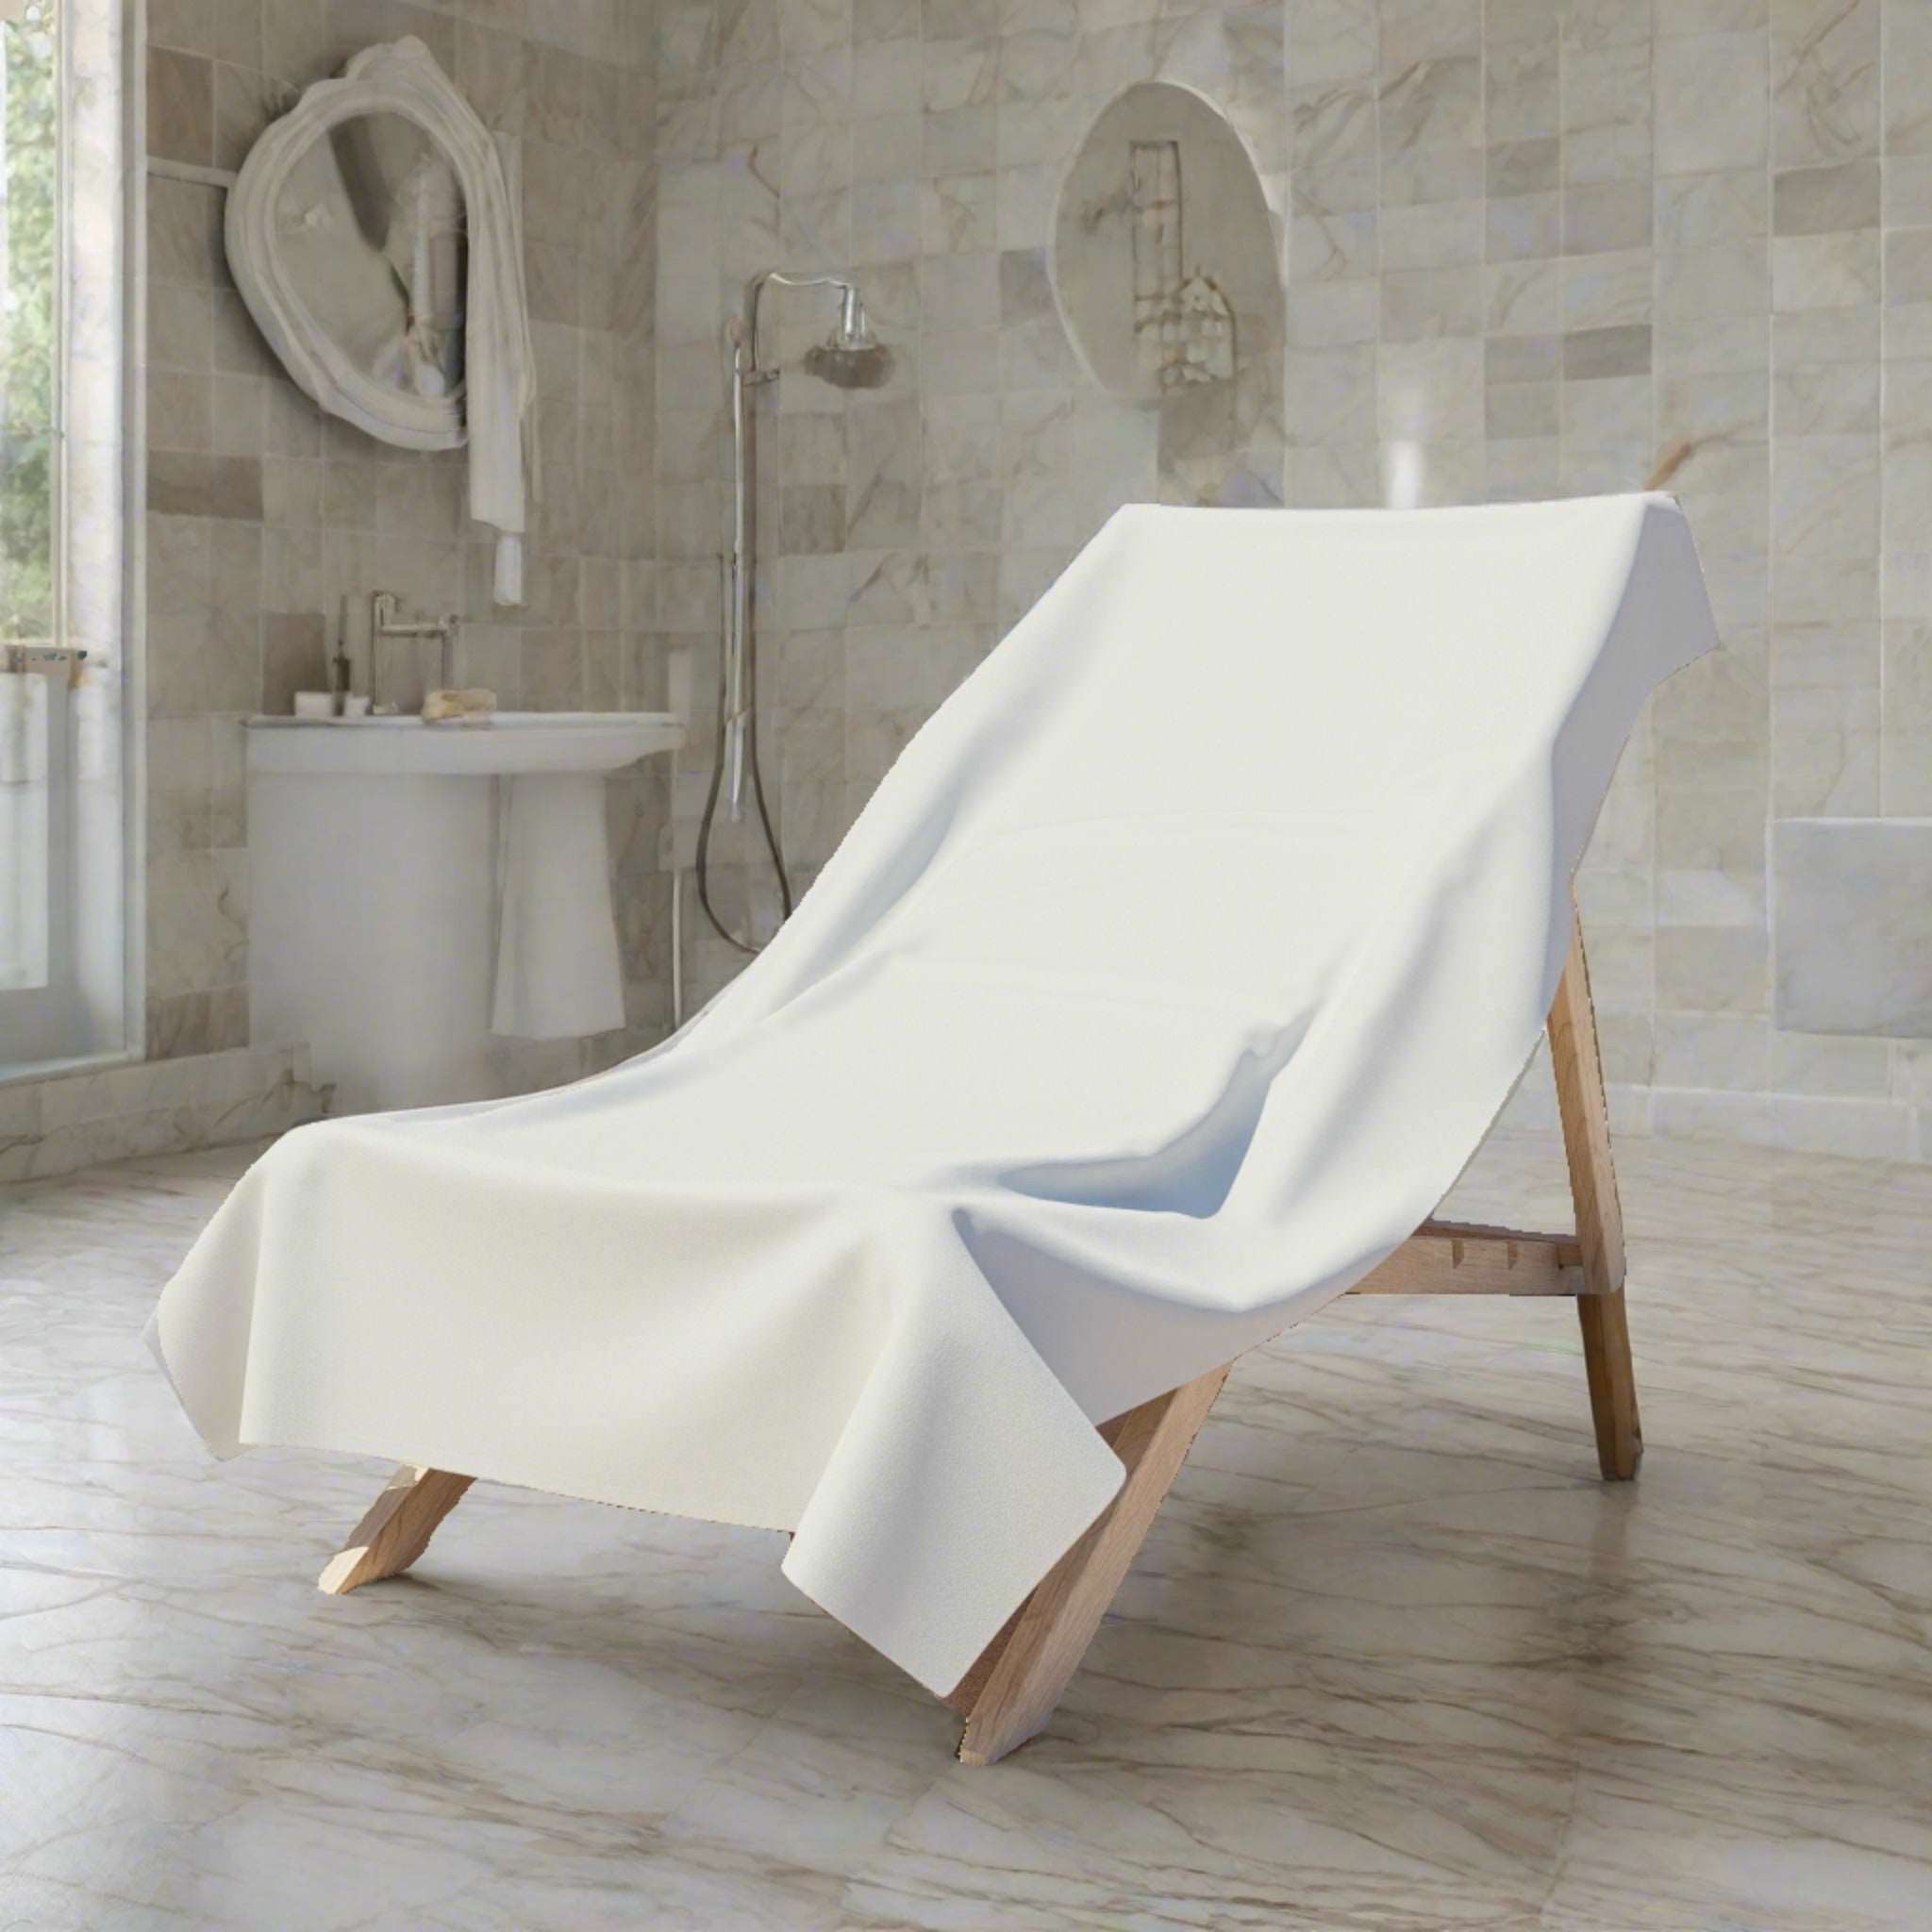 Bath Towel - Bone White 36